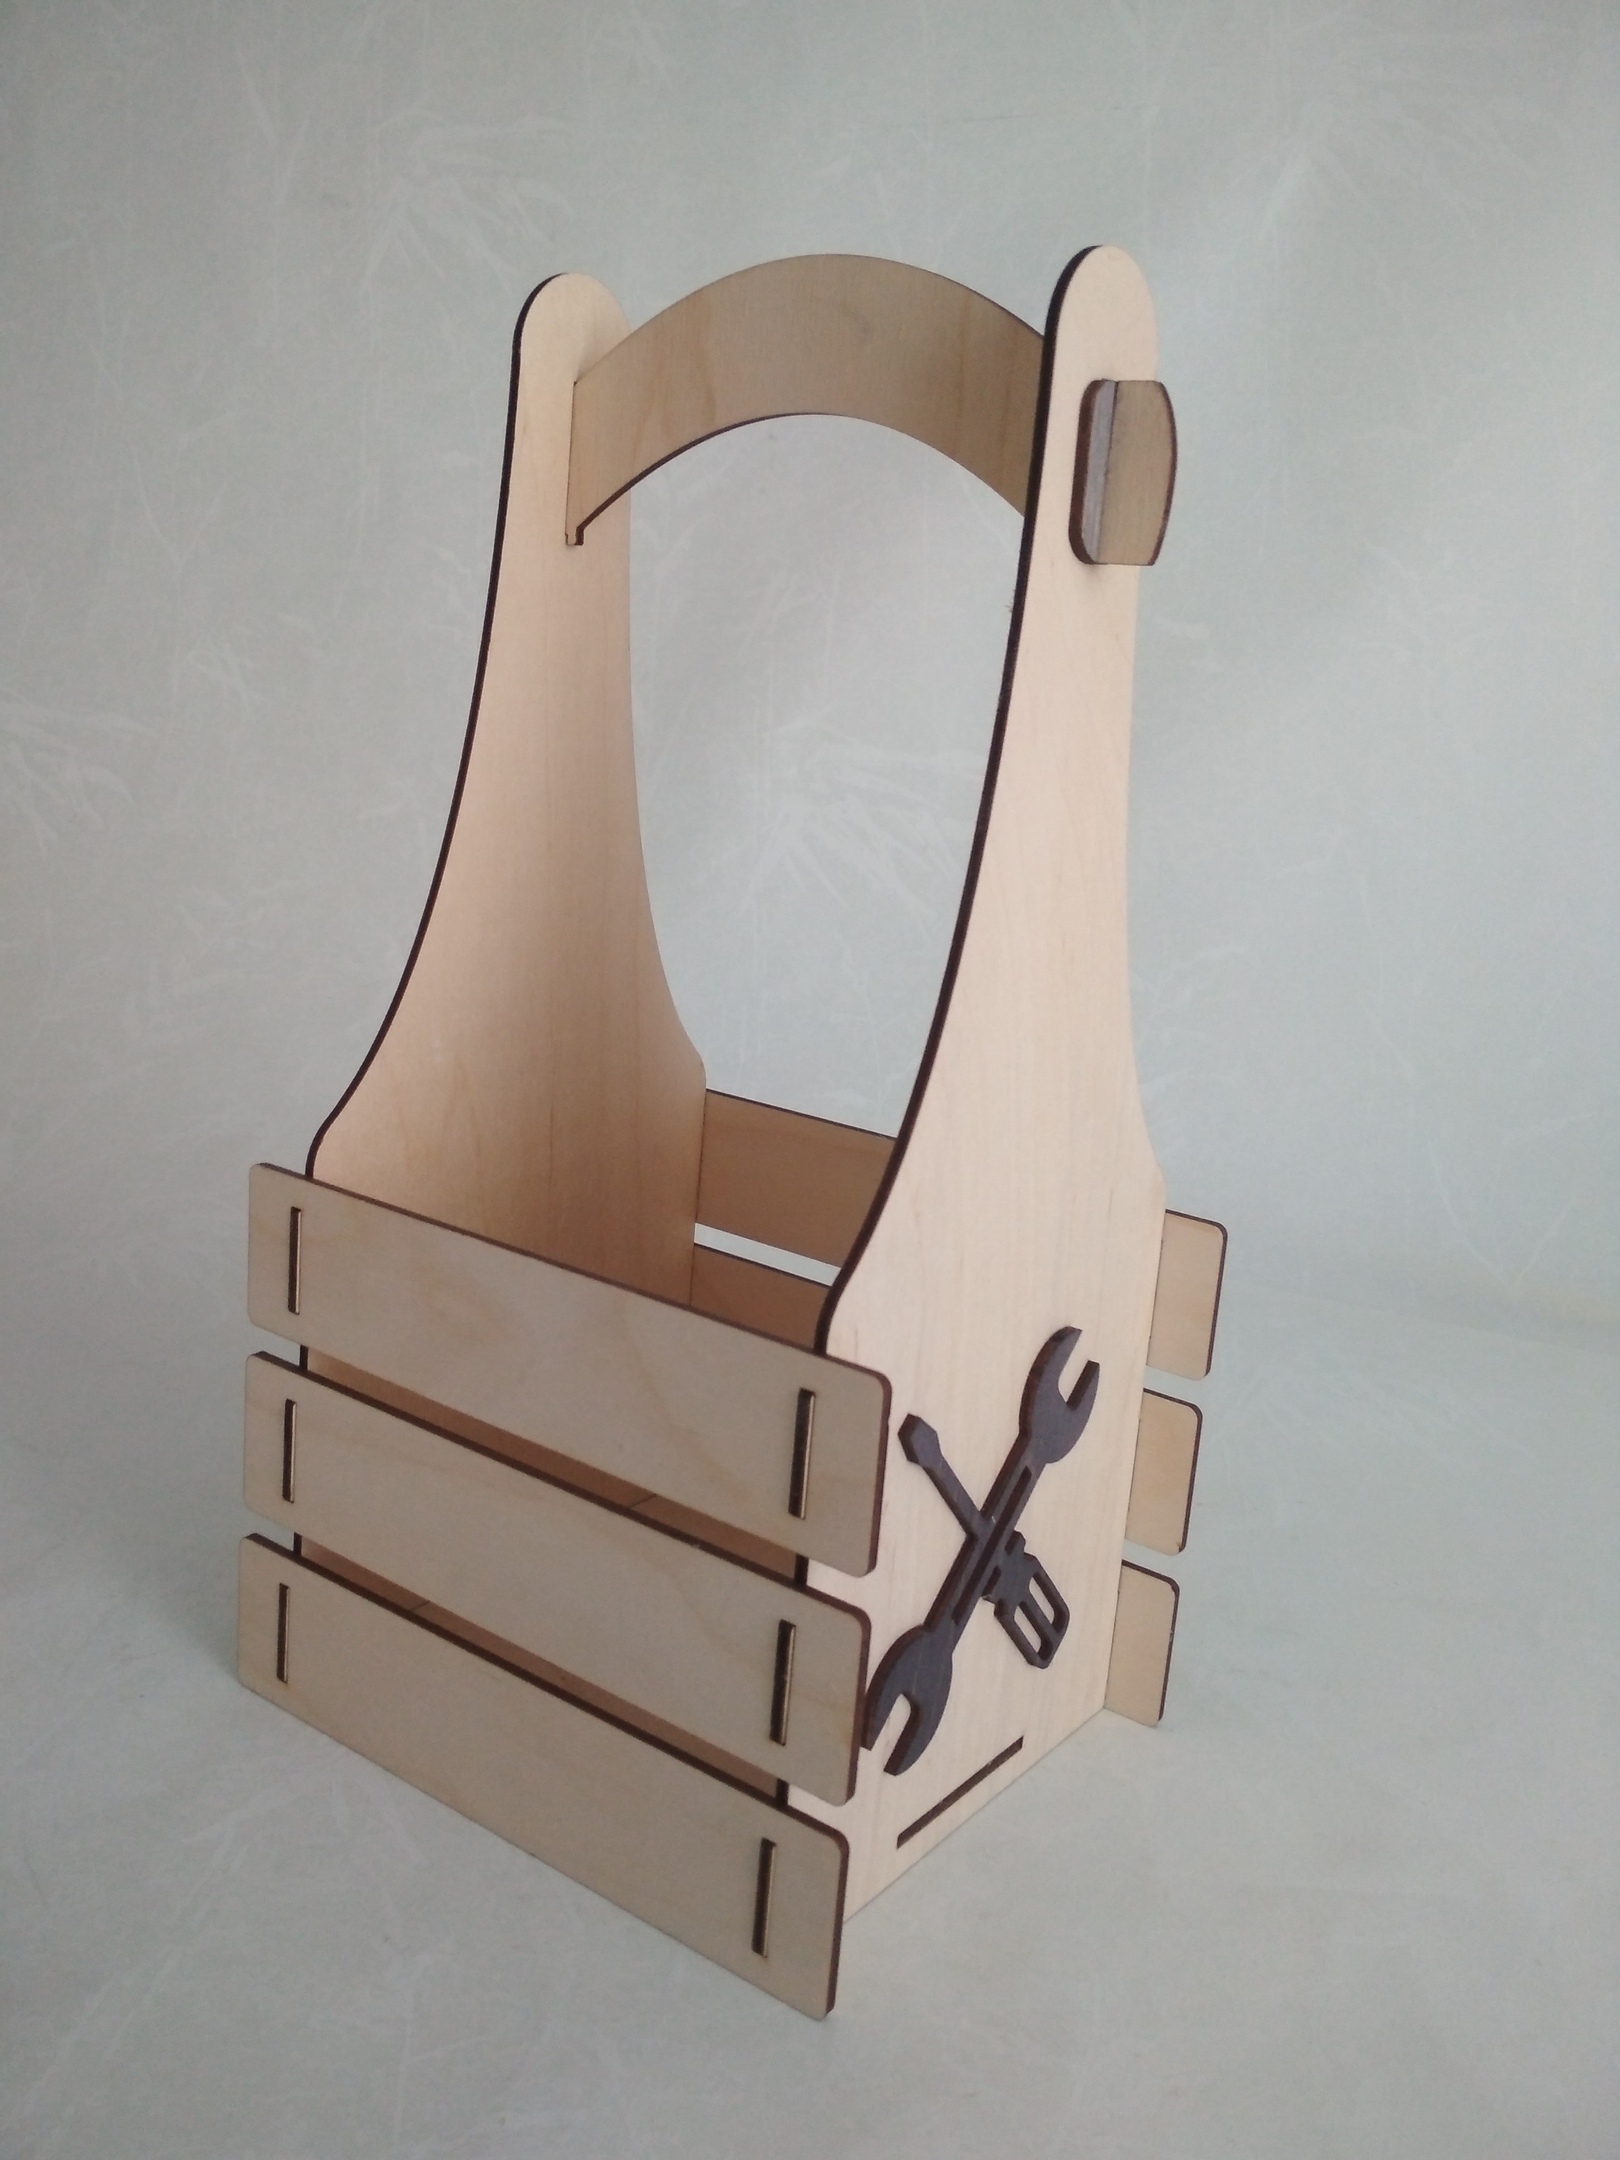 Laser Cut Wooden Tool Box Free Vector